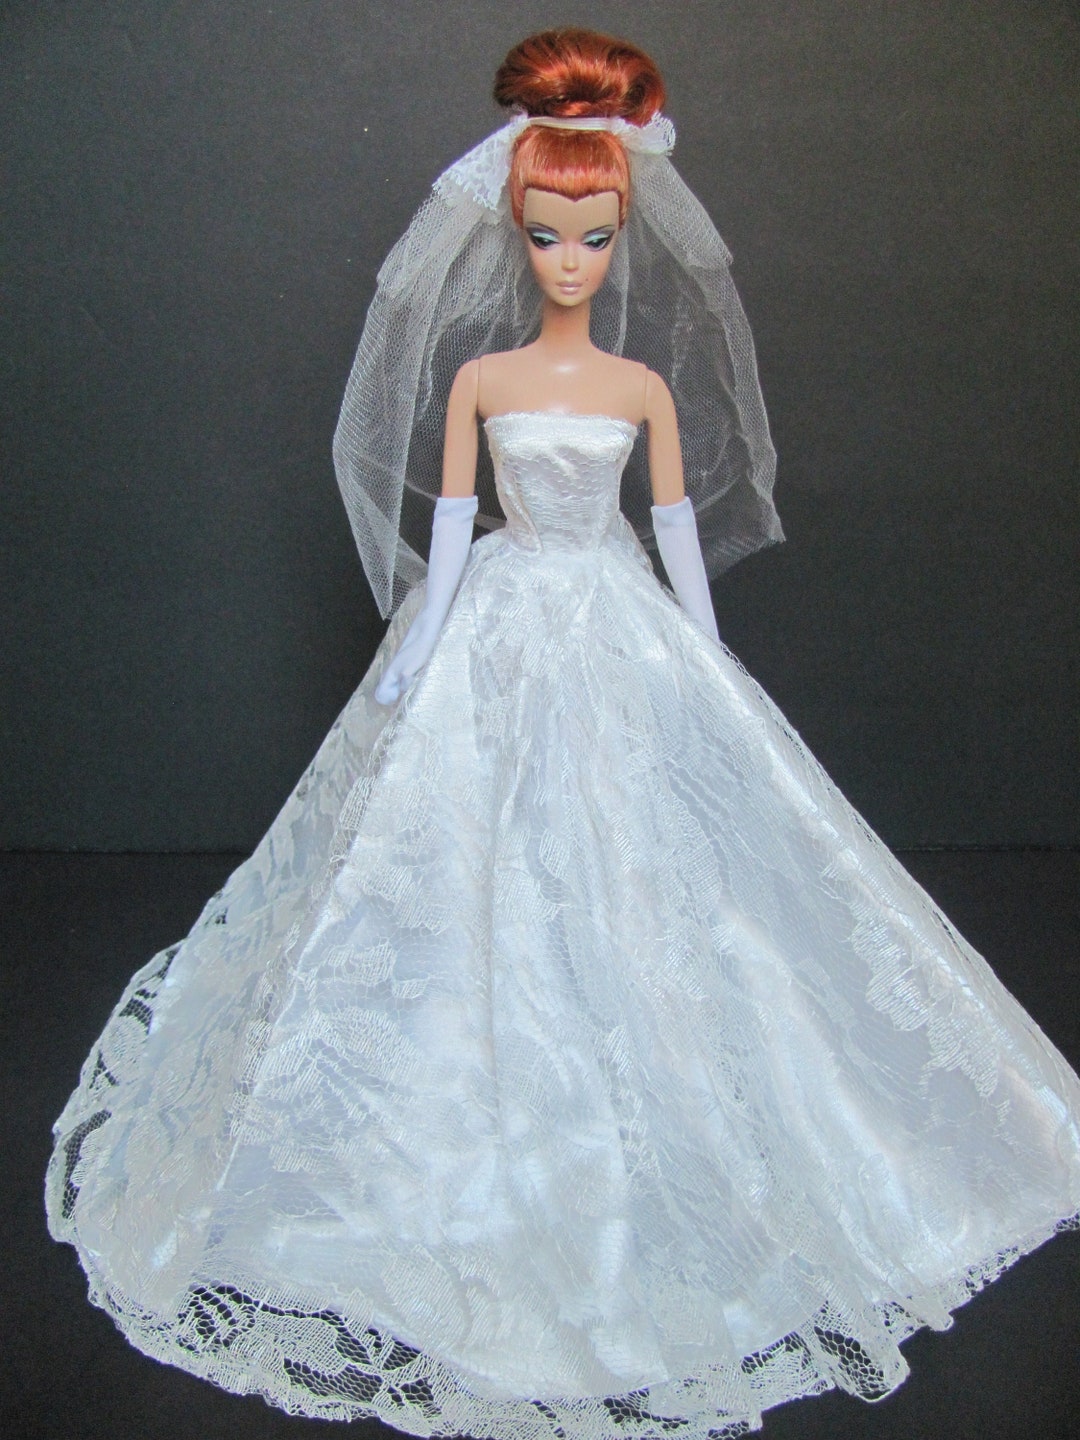 Handmade Doll Clothes Wedding Dress for 11.5 Inch Dolls Like - Etsy